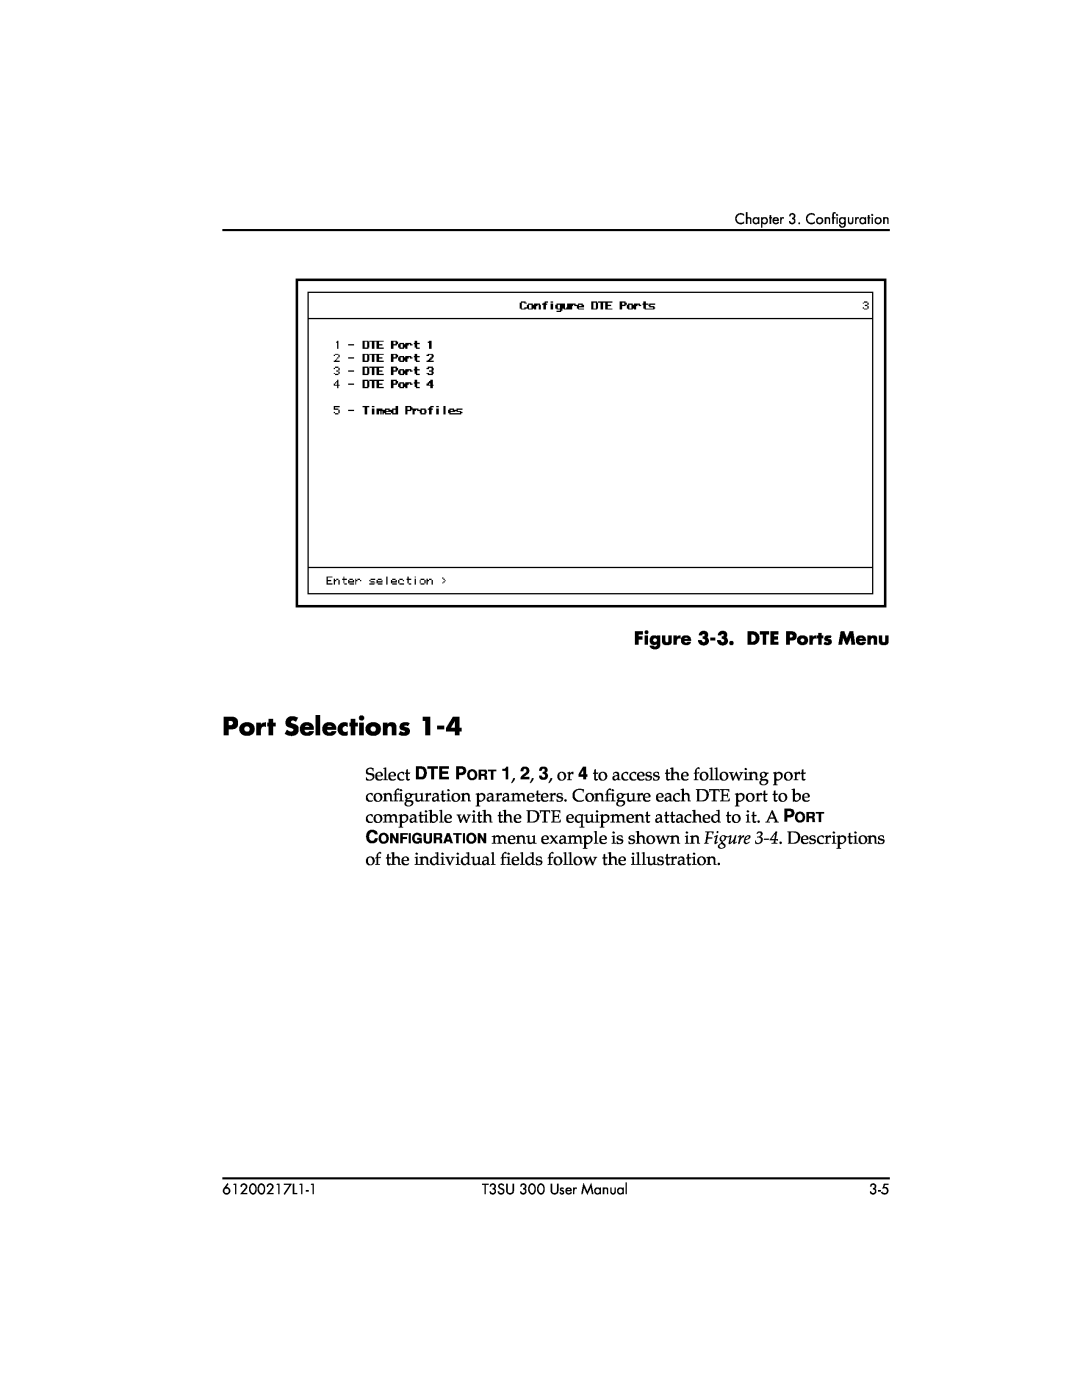 ADTRAN T3SU 300 user manual Port Selections, 3. DTE Ports Menu 